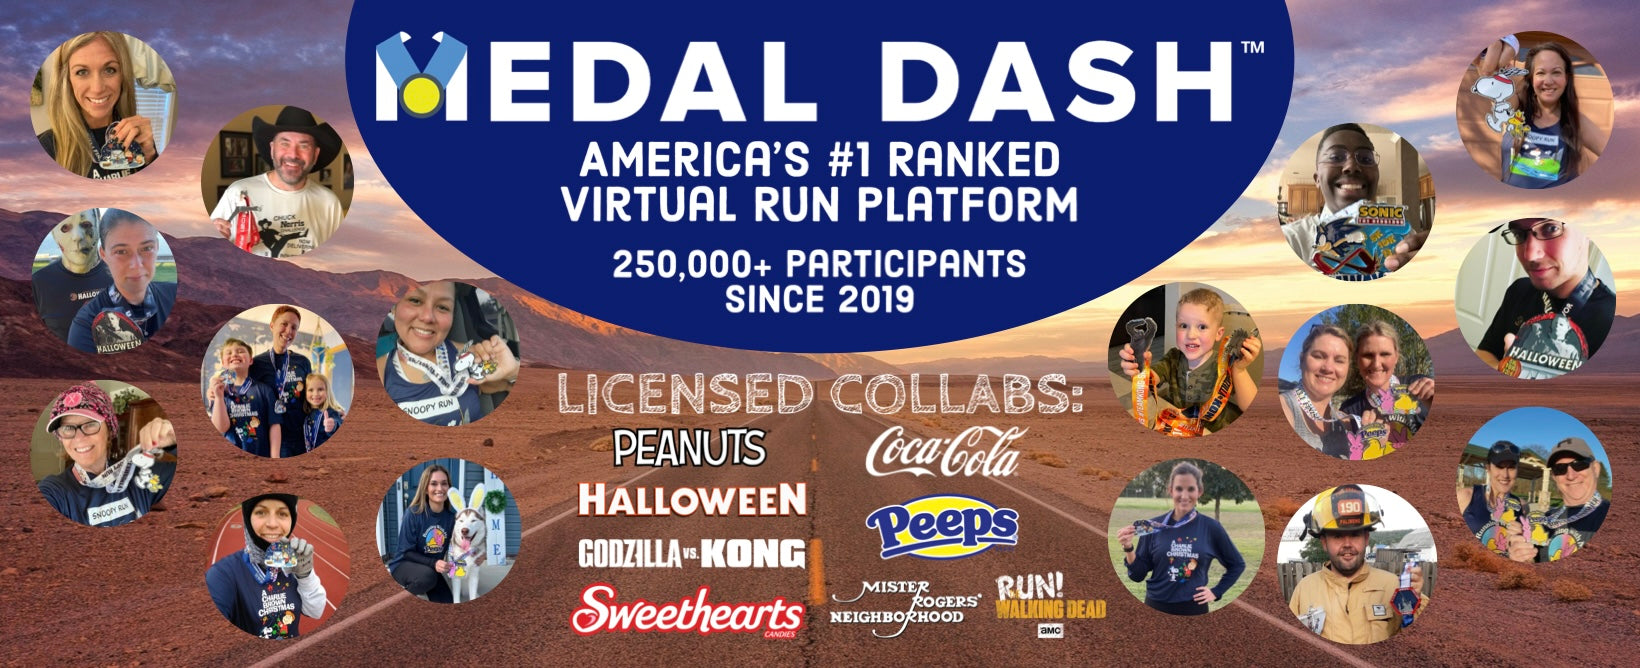 medal dash virtual runs 250,000 participants since 2019